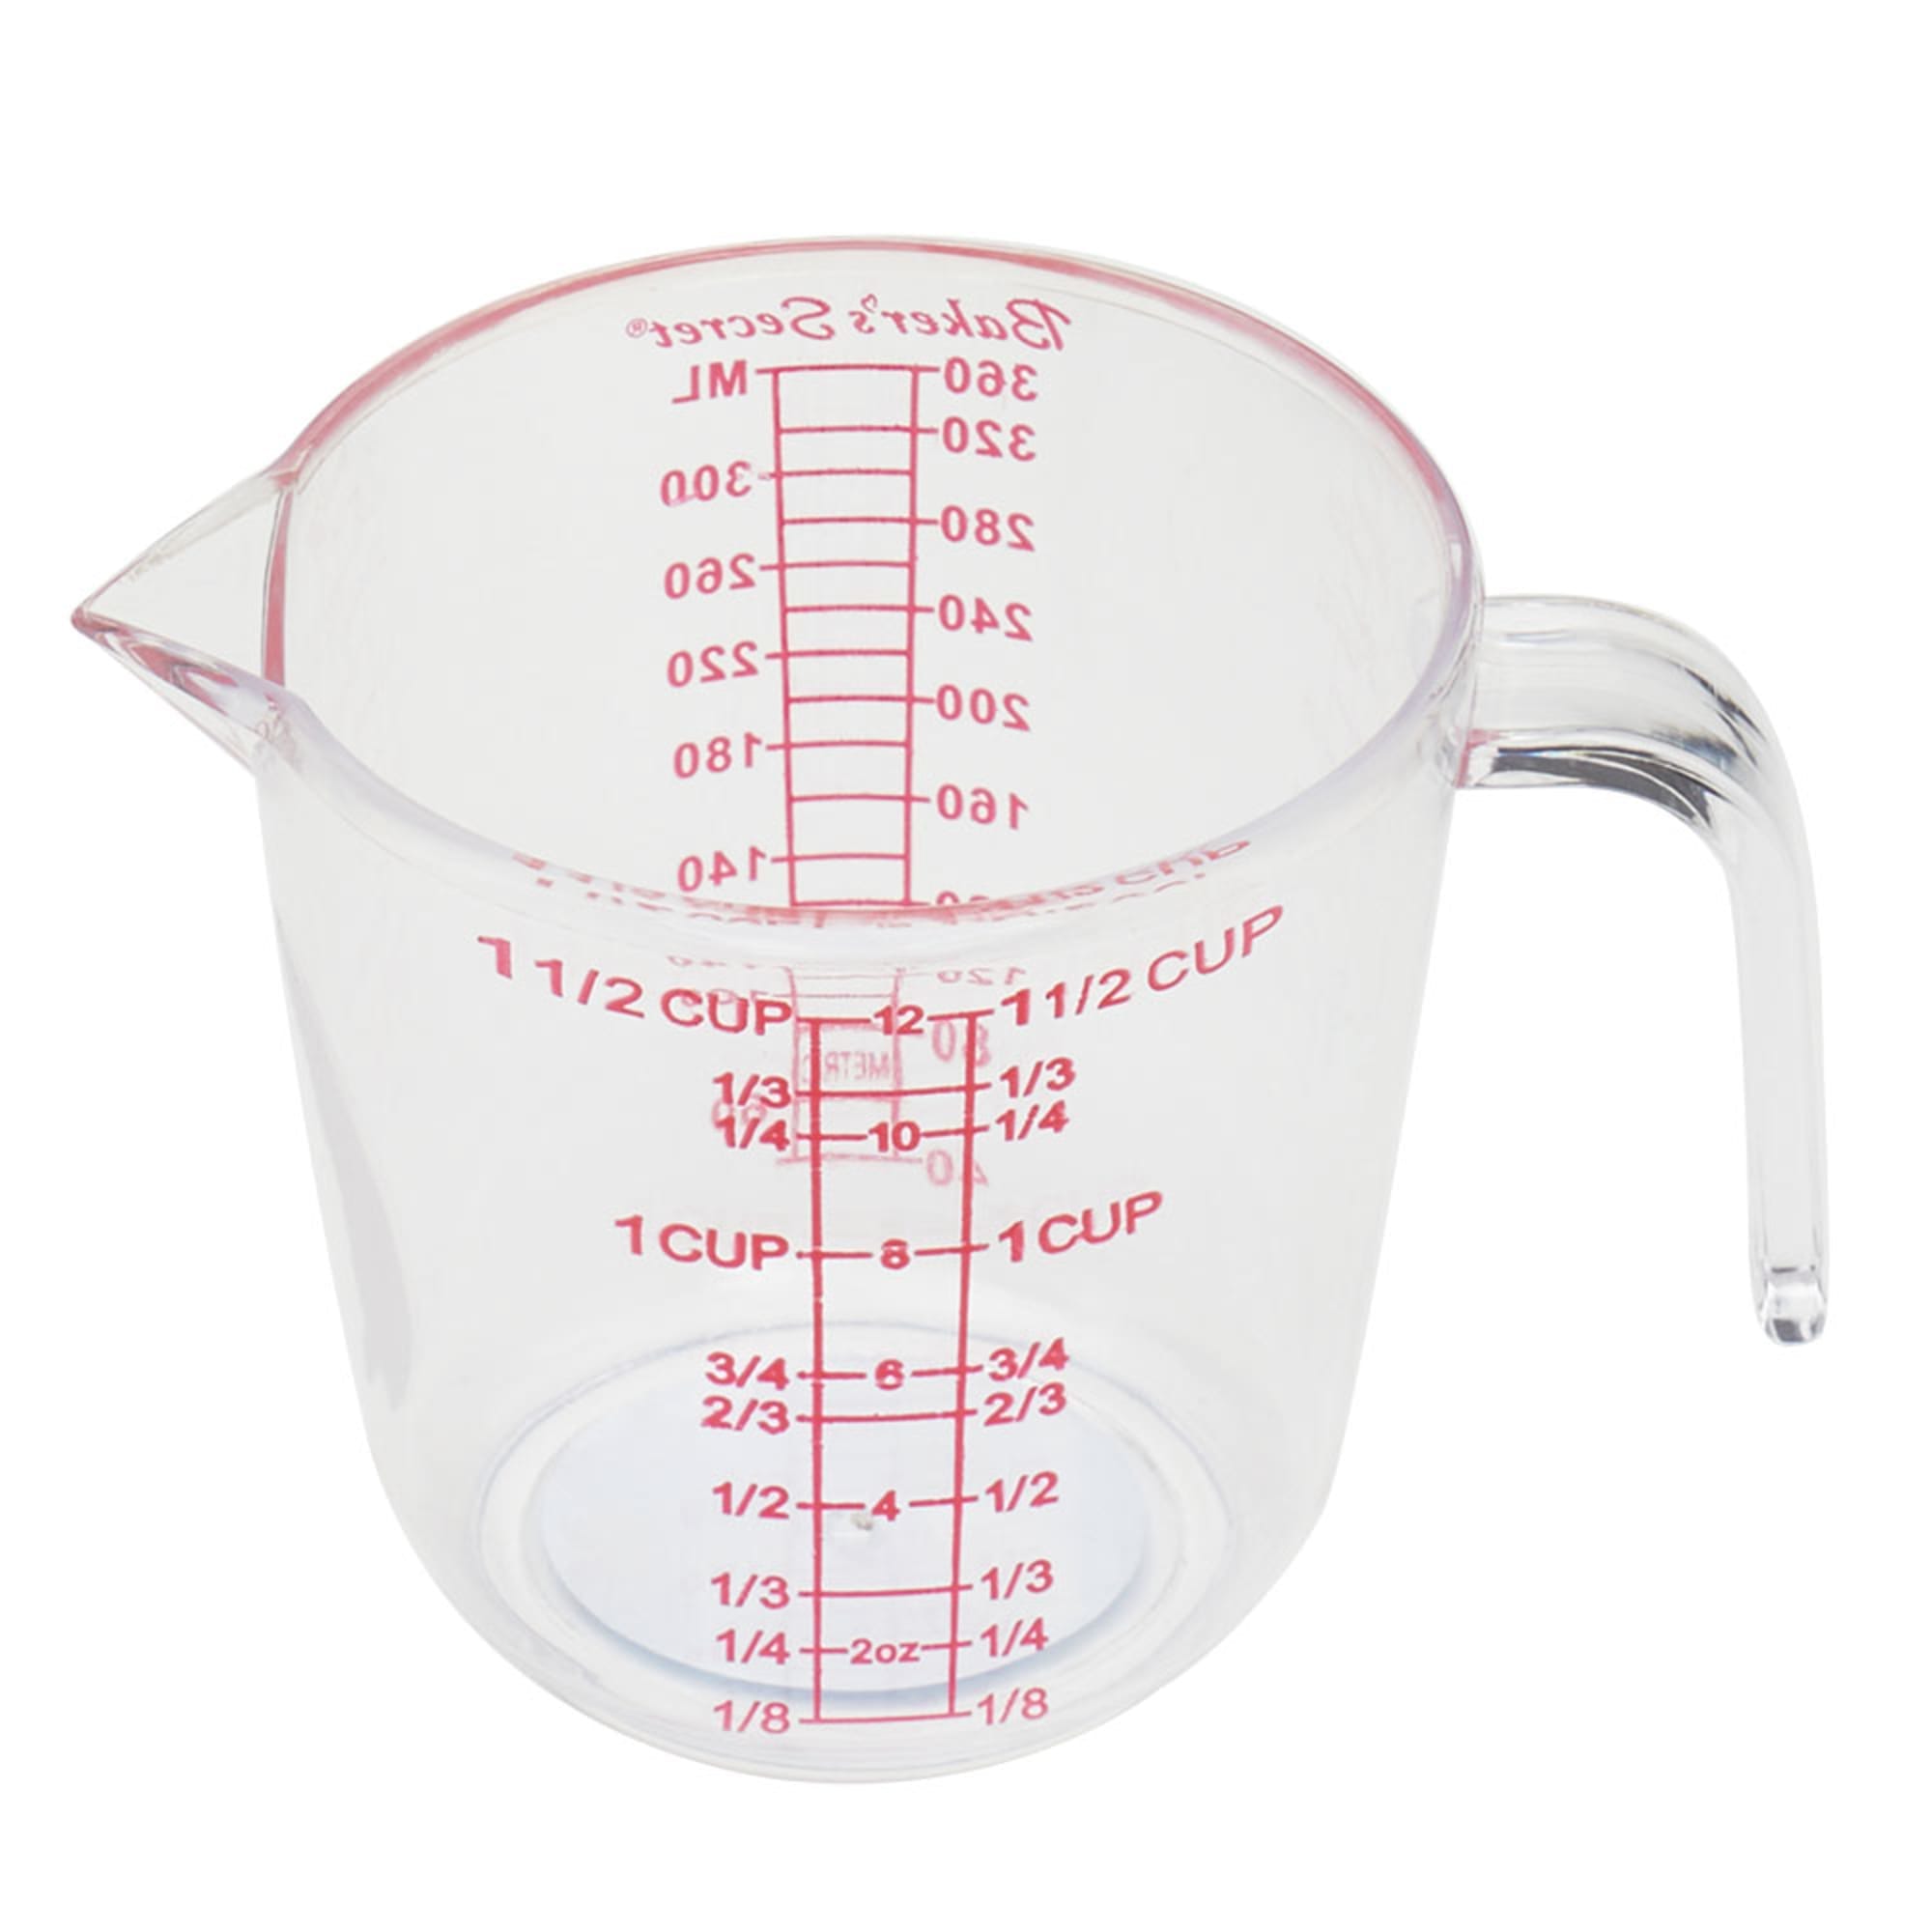 Baker's Secret Glass Durable 1000ml Measuring Cup 2.56x5.91x4.72 Clear